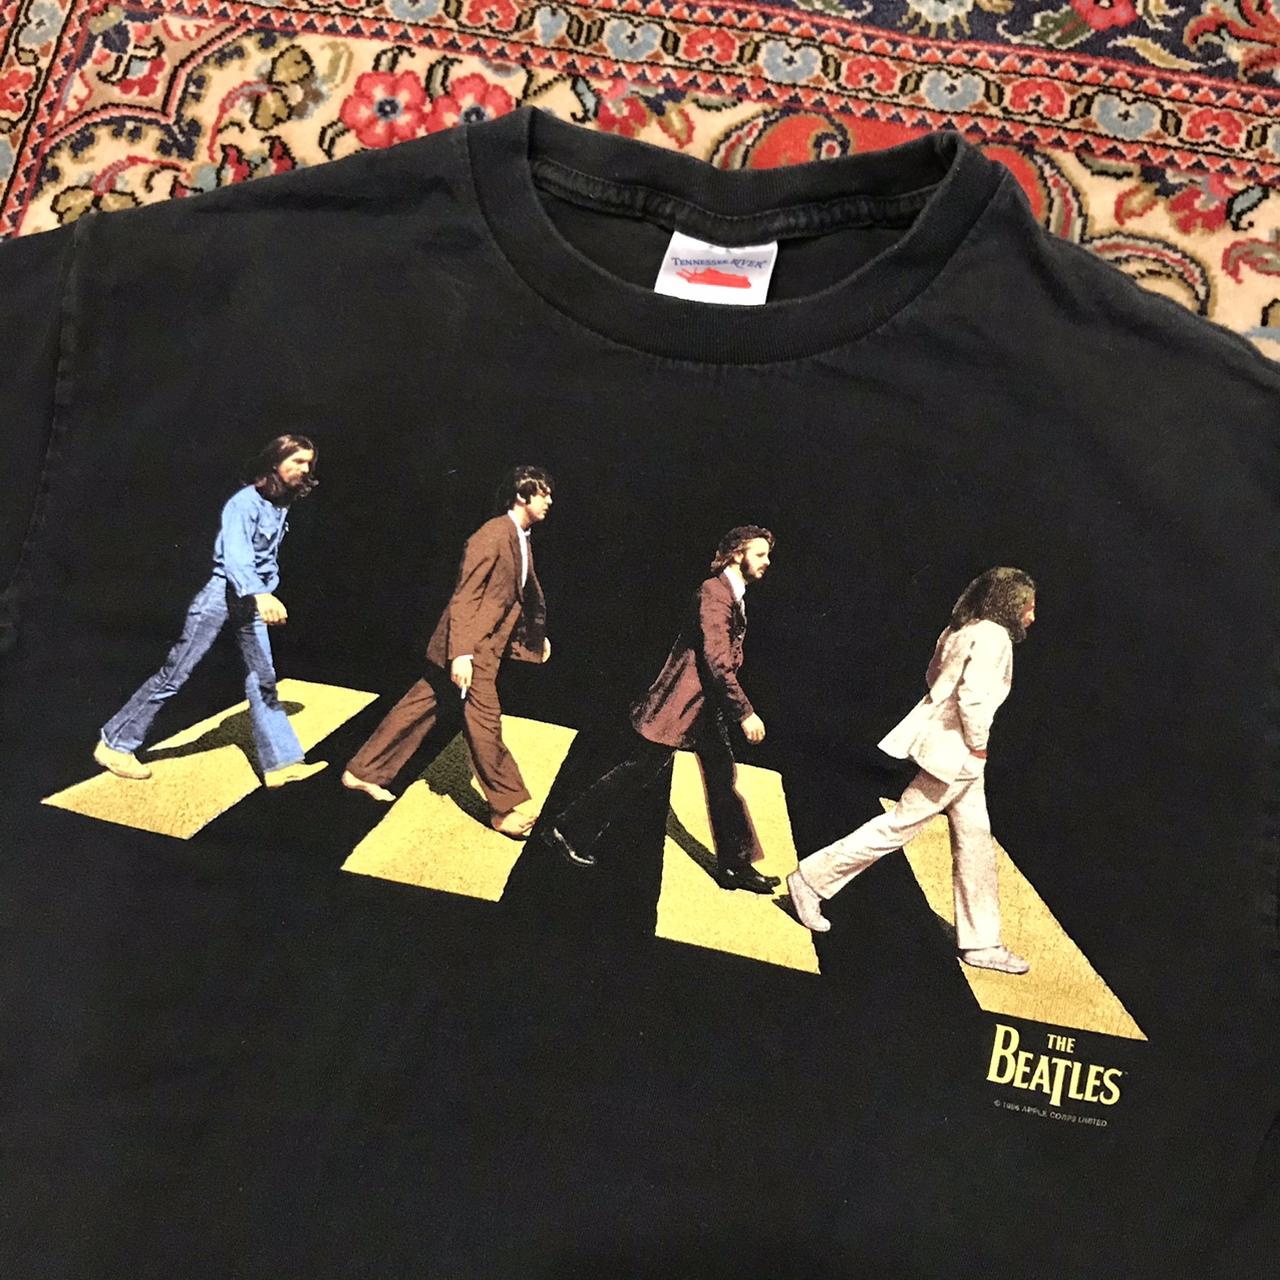 Beatles Abbey Road Black T-Shirt - M